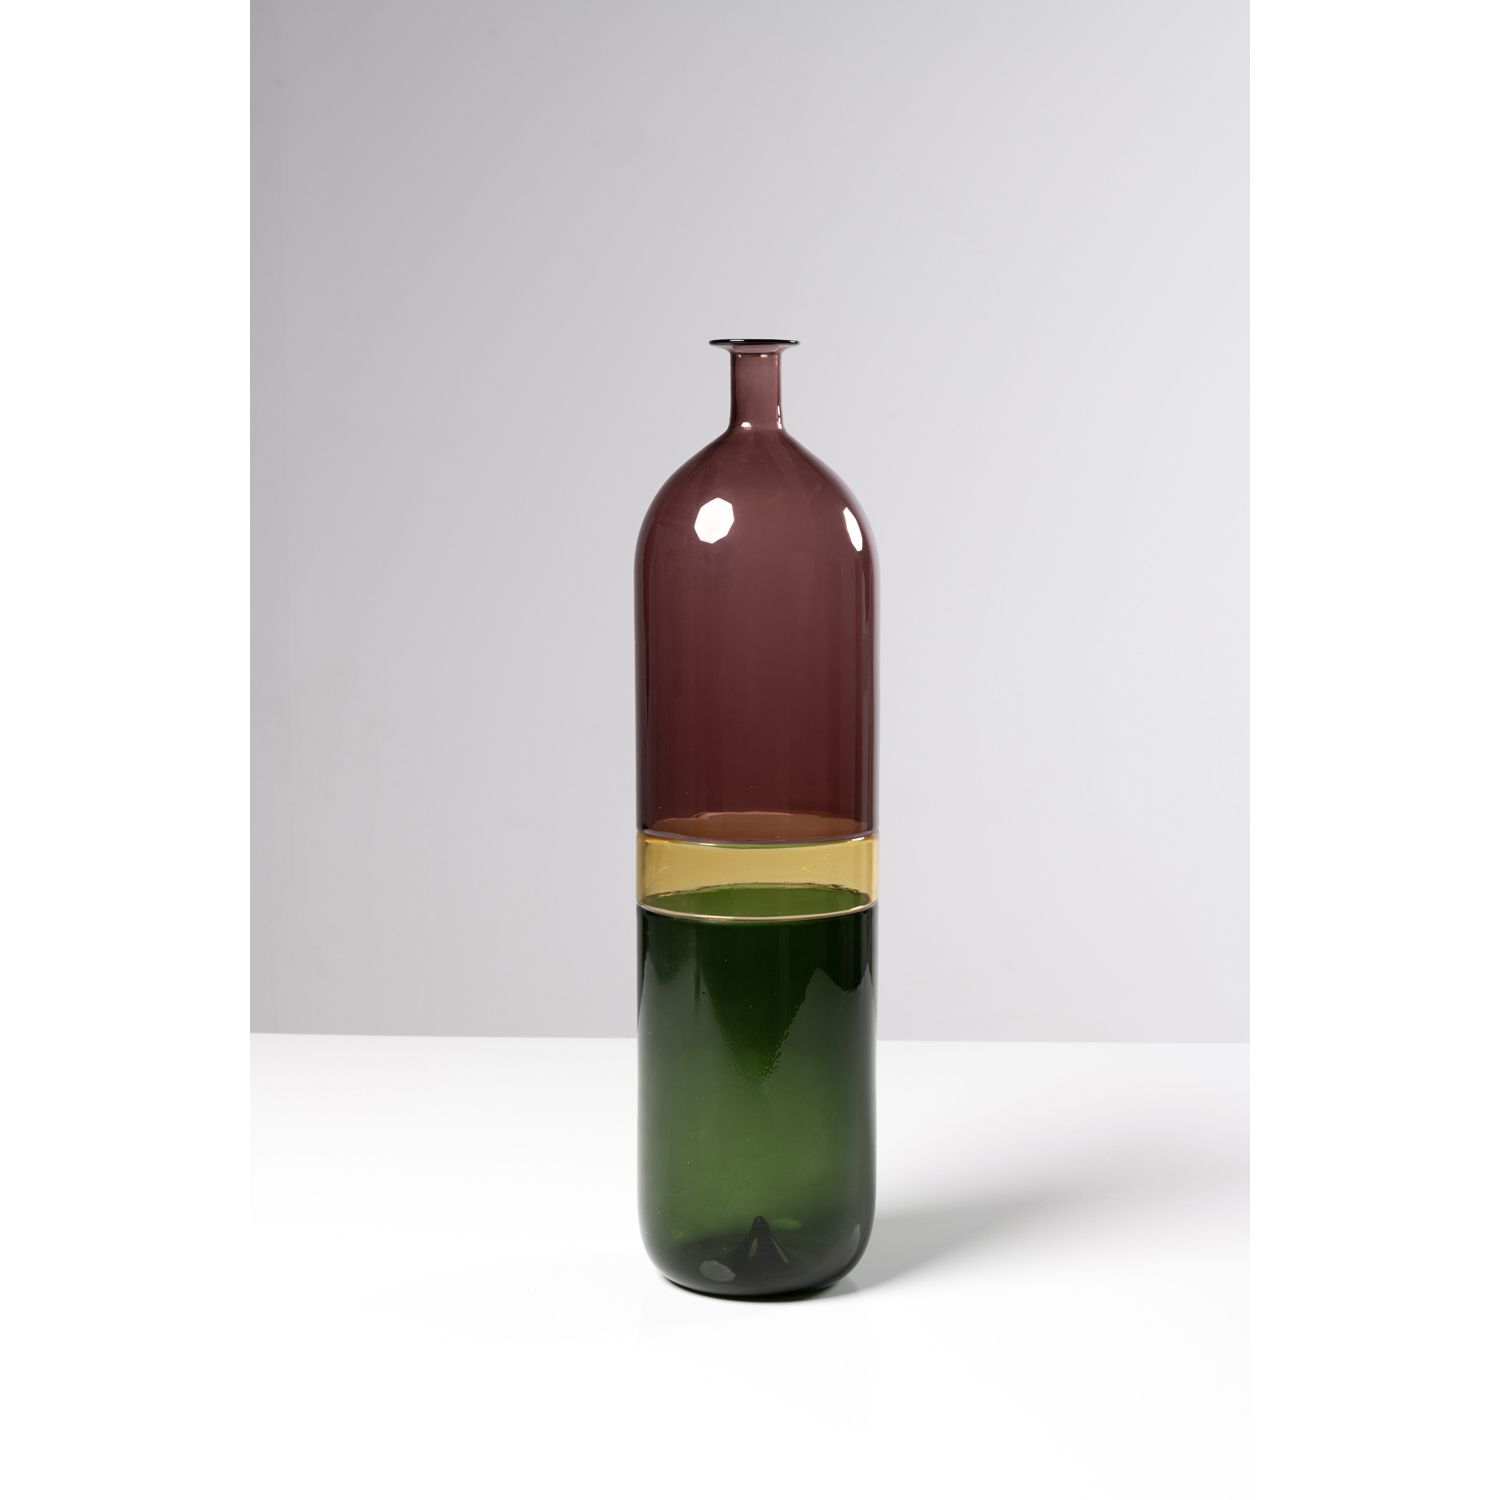 Null 塔皮奥-维尔卡拉(1915-1985)

茉莉花瓶

用 "incalmo "技术吹制的玻璃

维尼尼版

底座下刻有 "Venini Italy T&hellip;